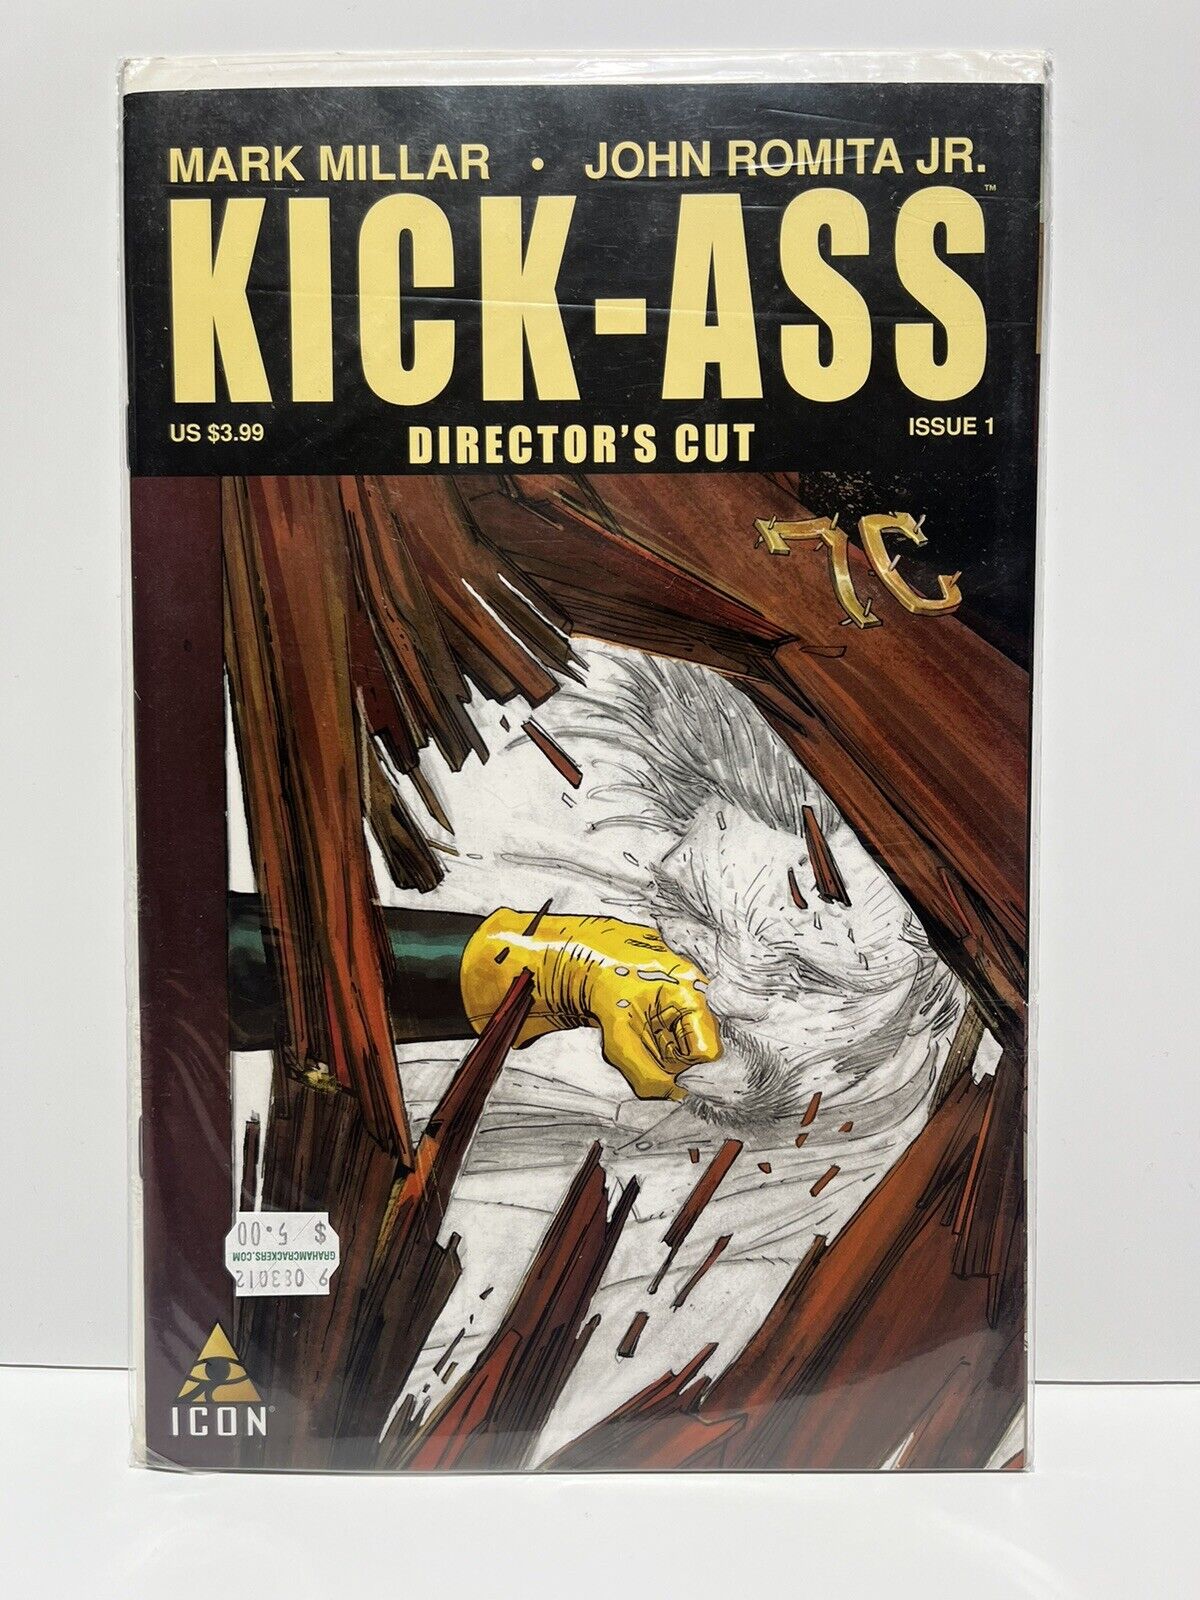 Kick-Ass #1 - Aug 2008 - Marvel / Icon - Director's Cut - Minor Key - (924A)